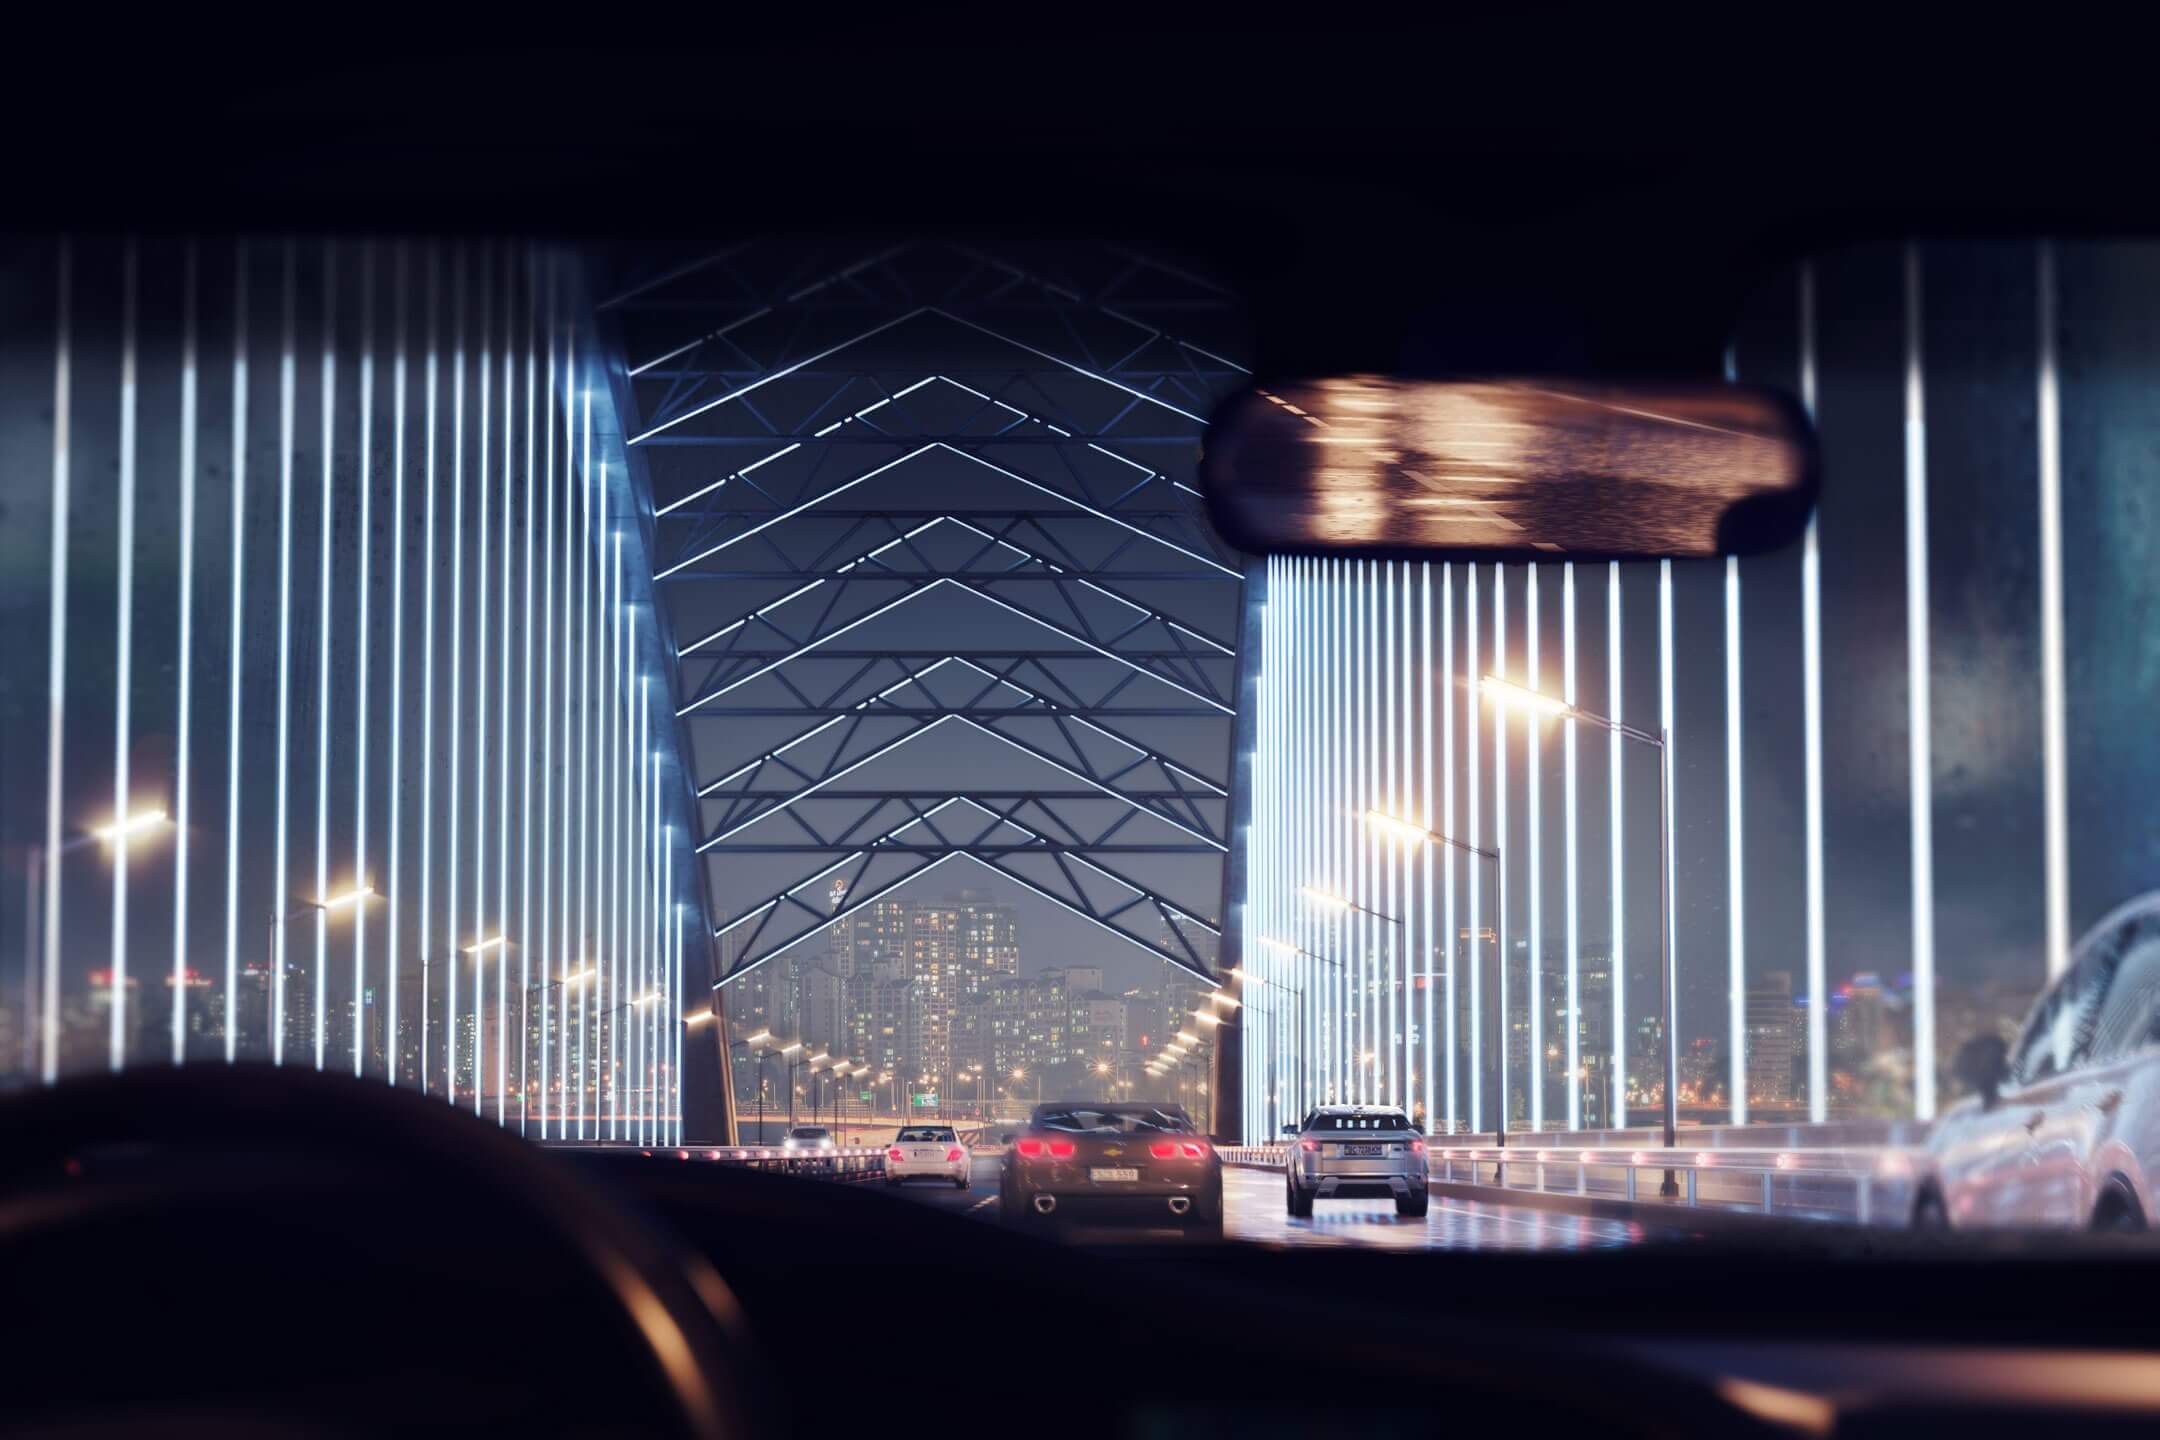 Architectural 3D Rendering Of A Bridge Design